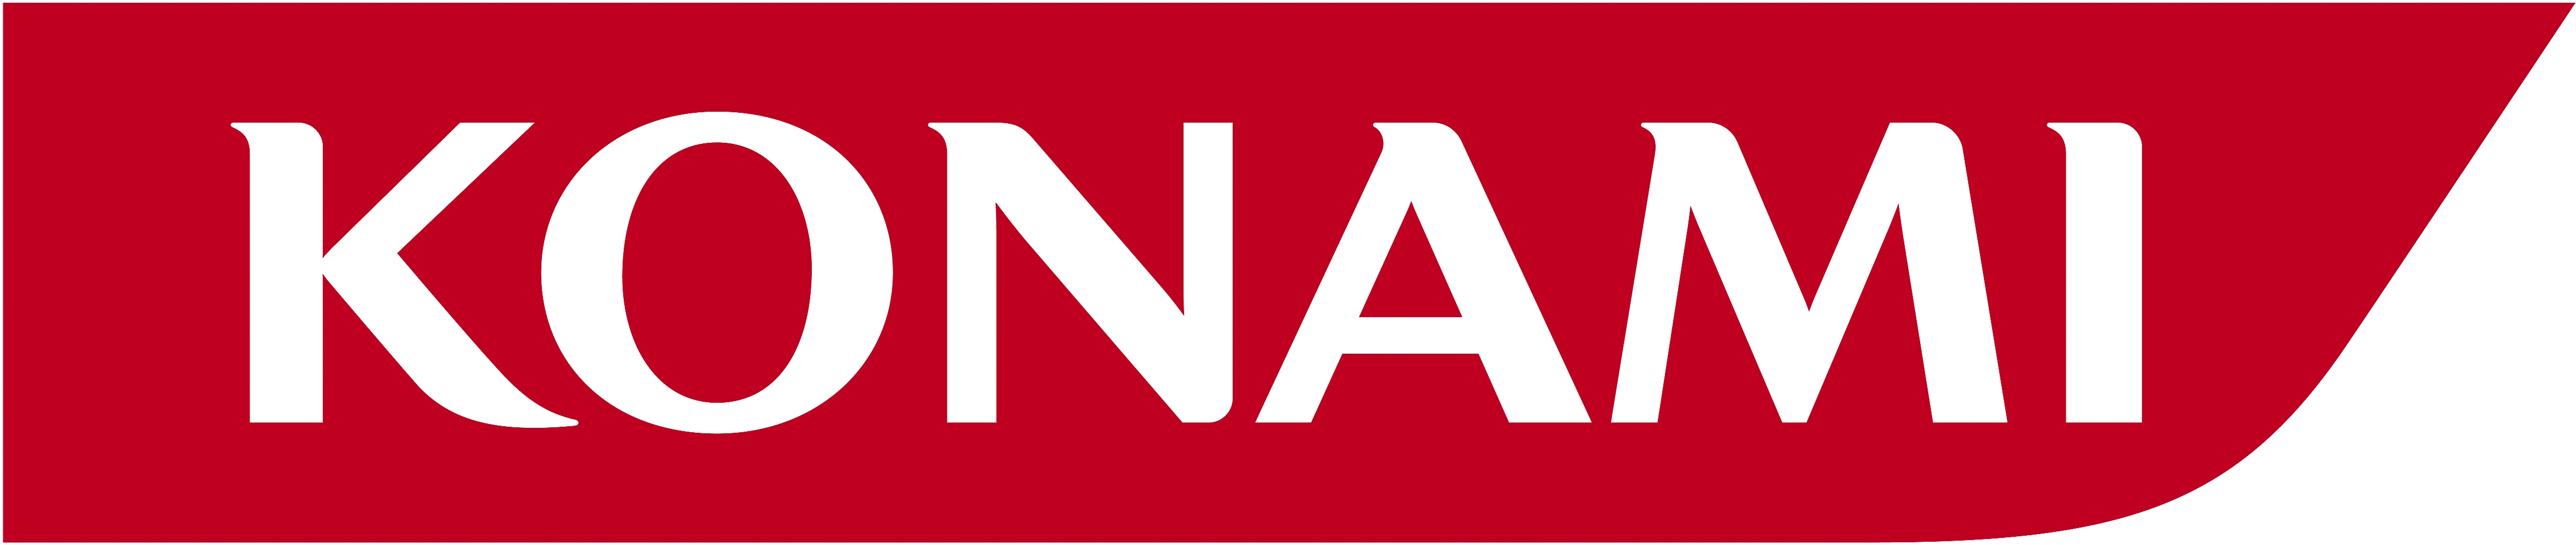 Konami Logo photo - 1